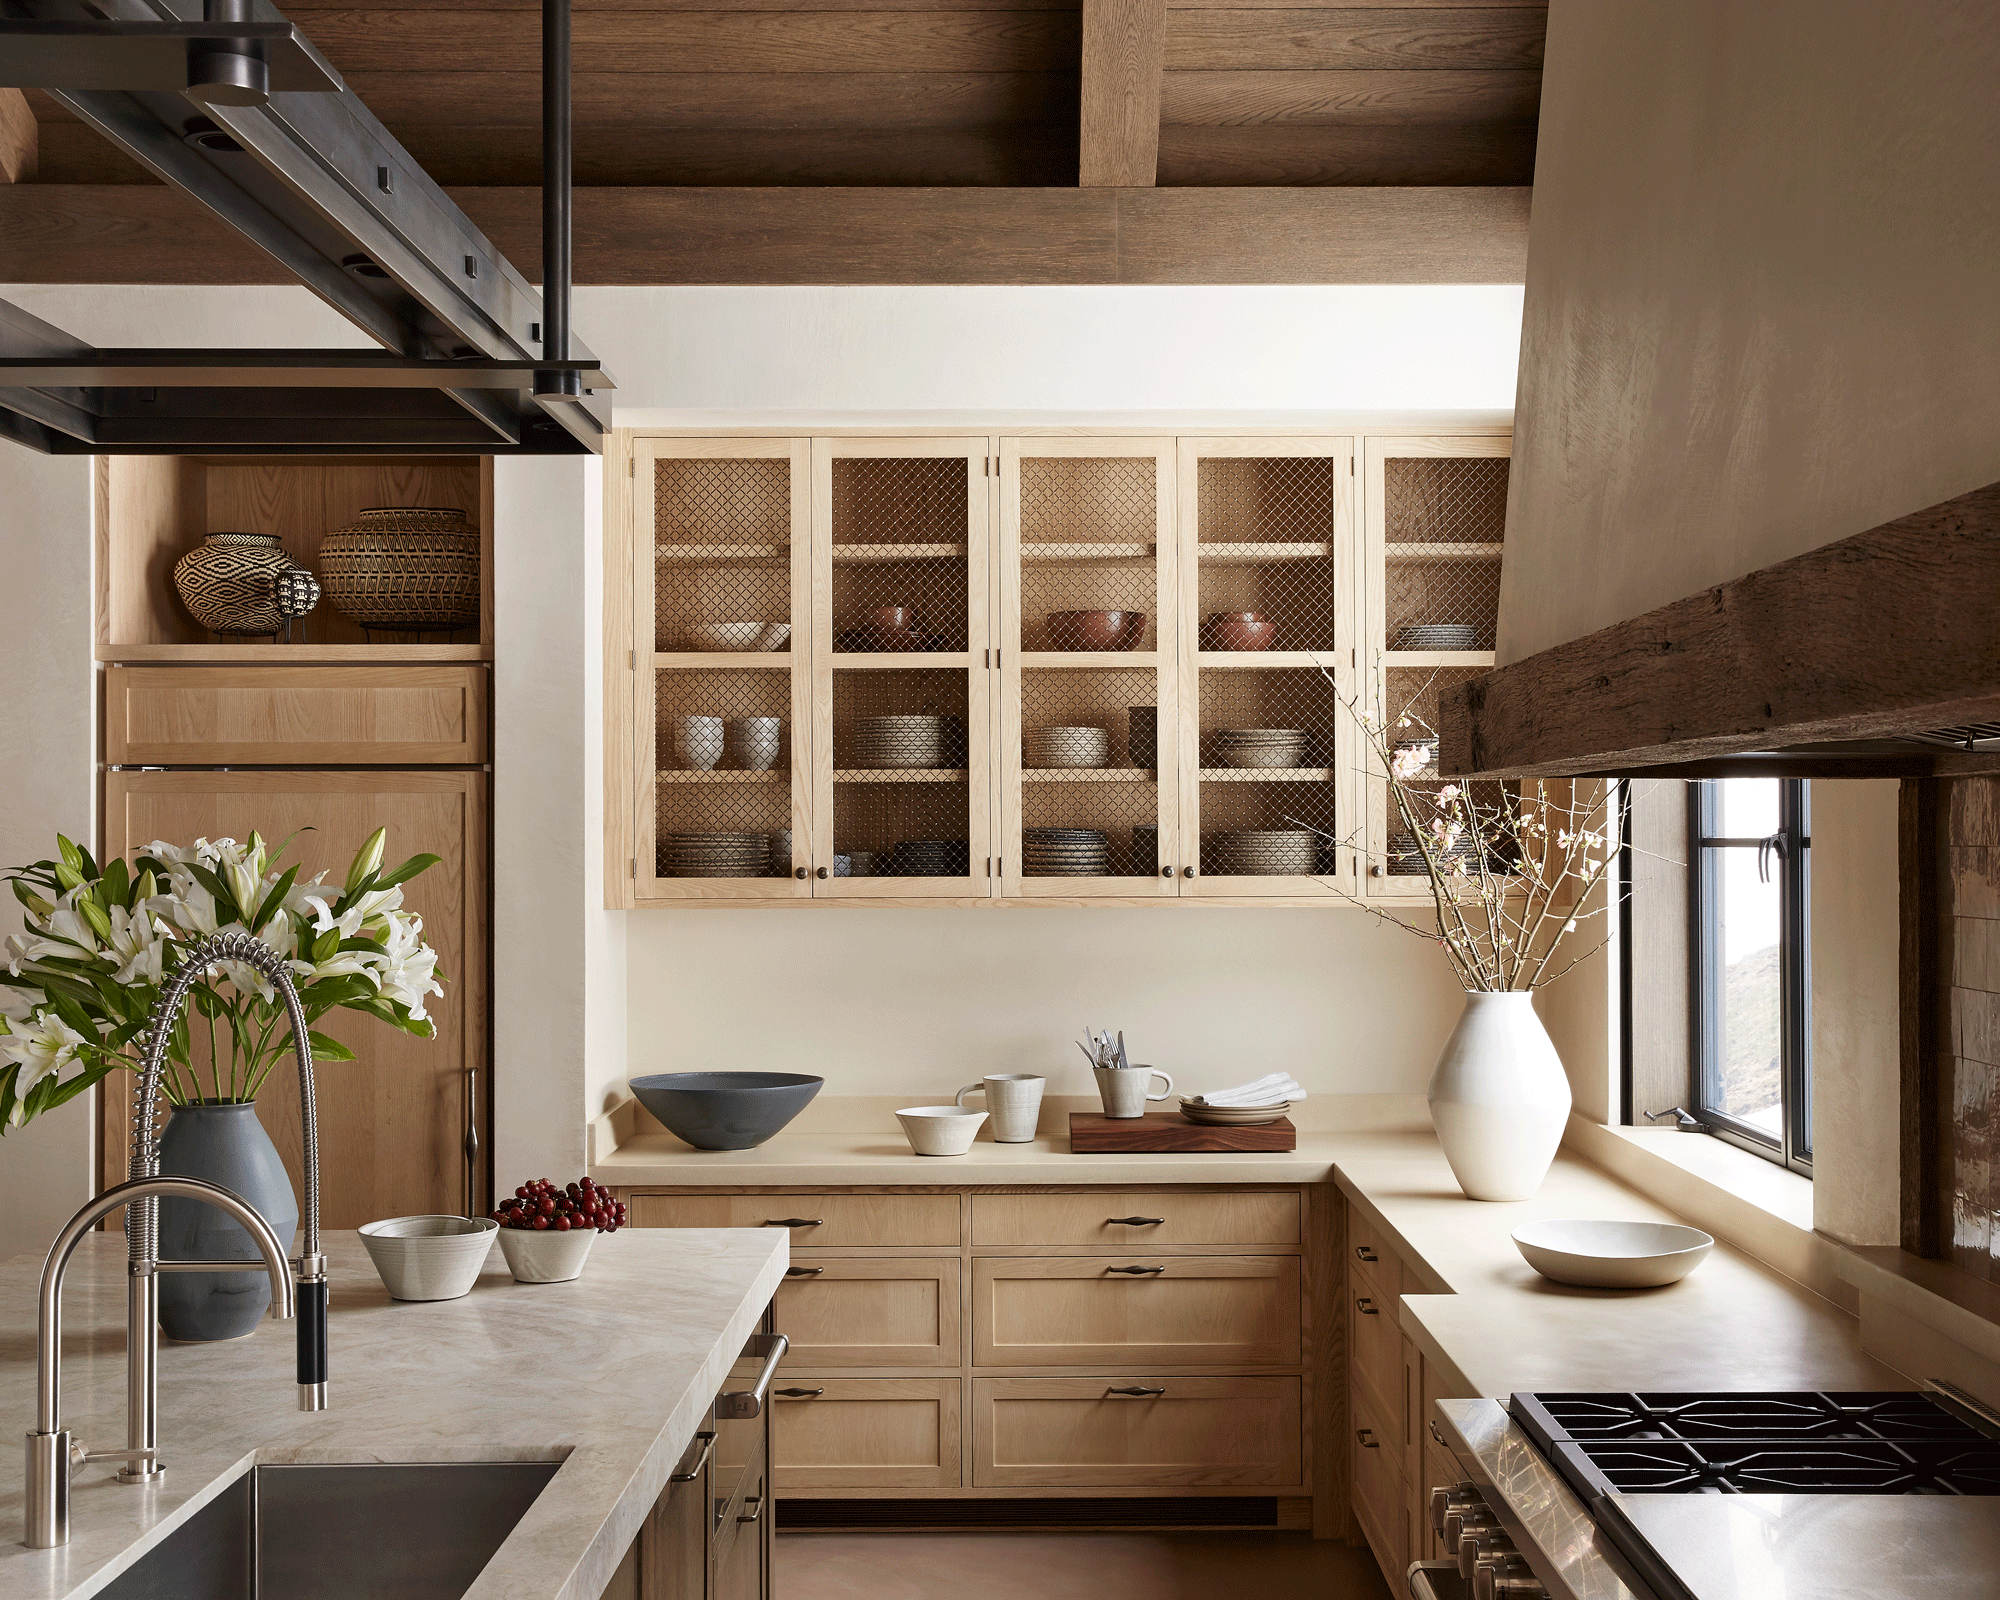 wood kitchen cabinet ideas - Modern rustic farmhouse